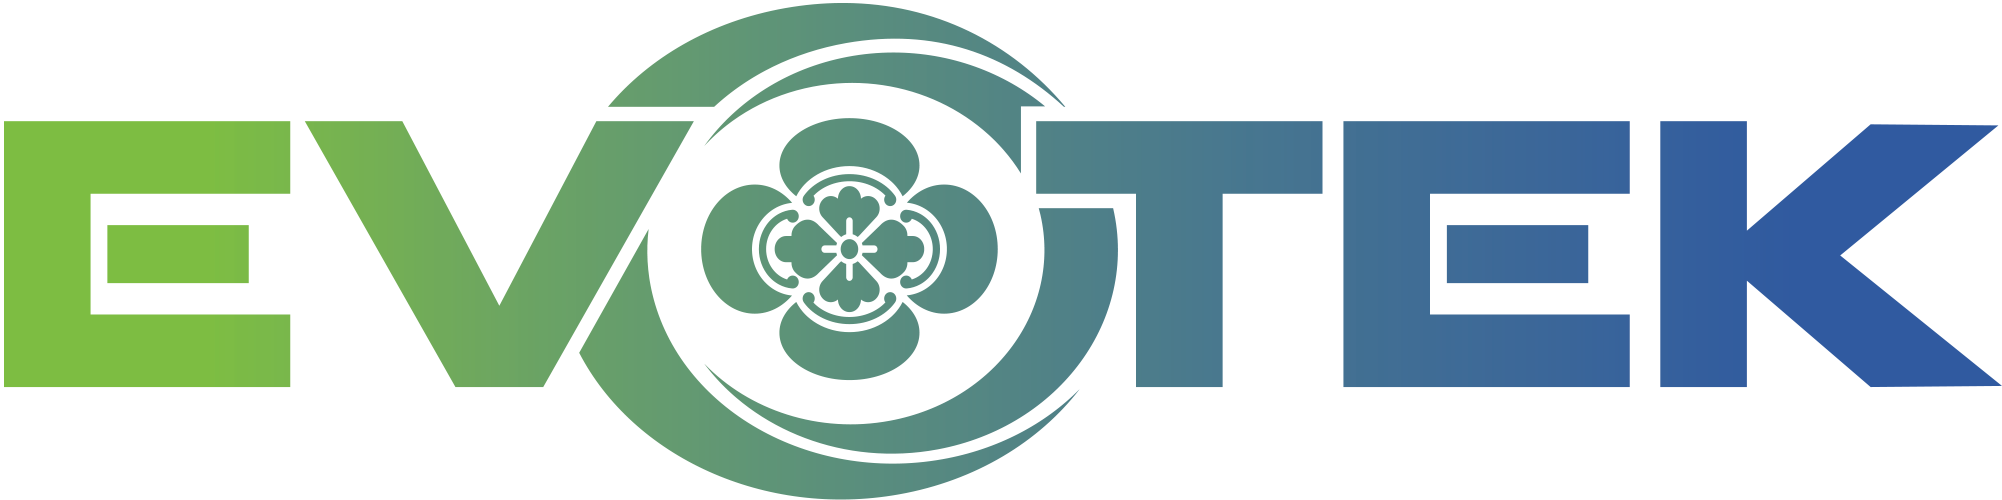 evotek logo